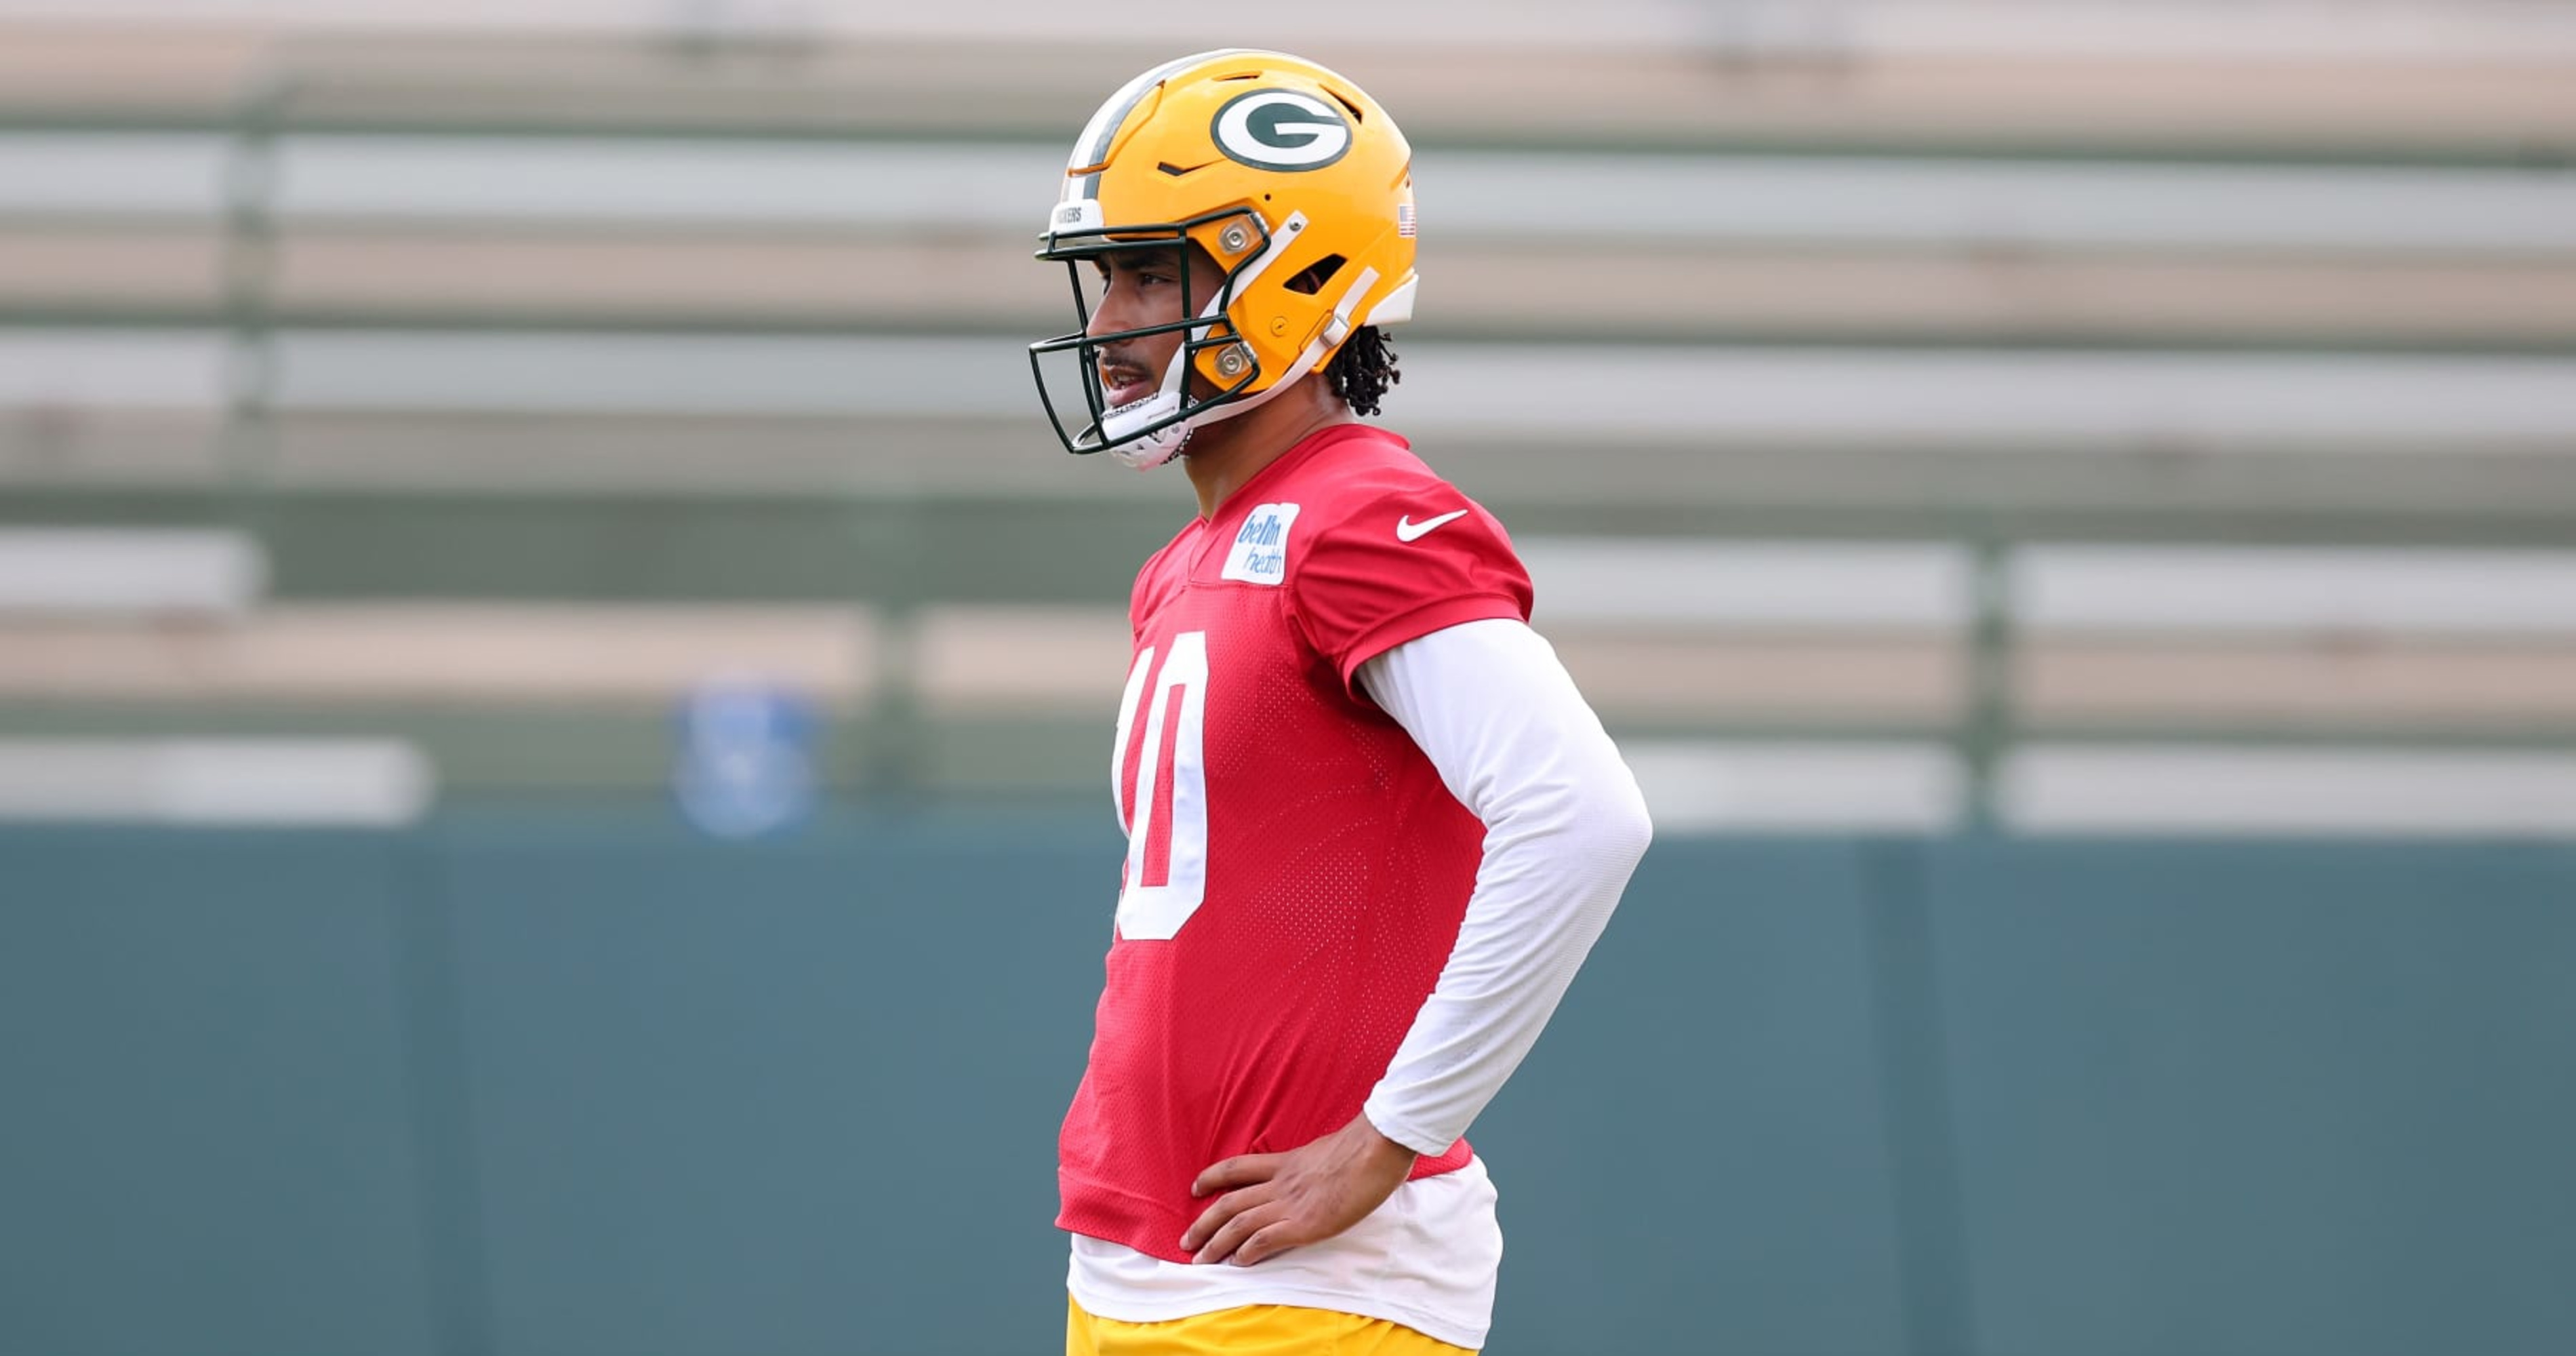 NFL Rumors: Jordan Love, Packers ‘Making Progress’ on Contract Extension amid Talks